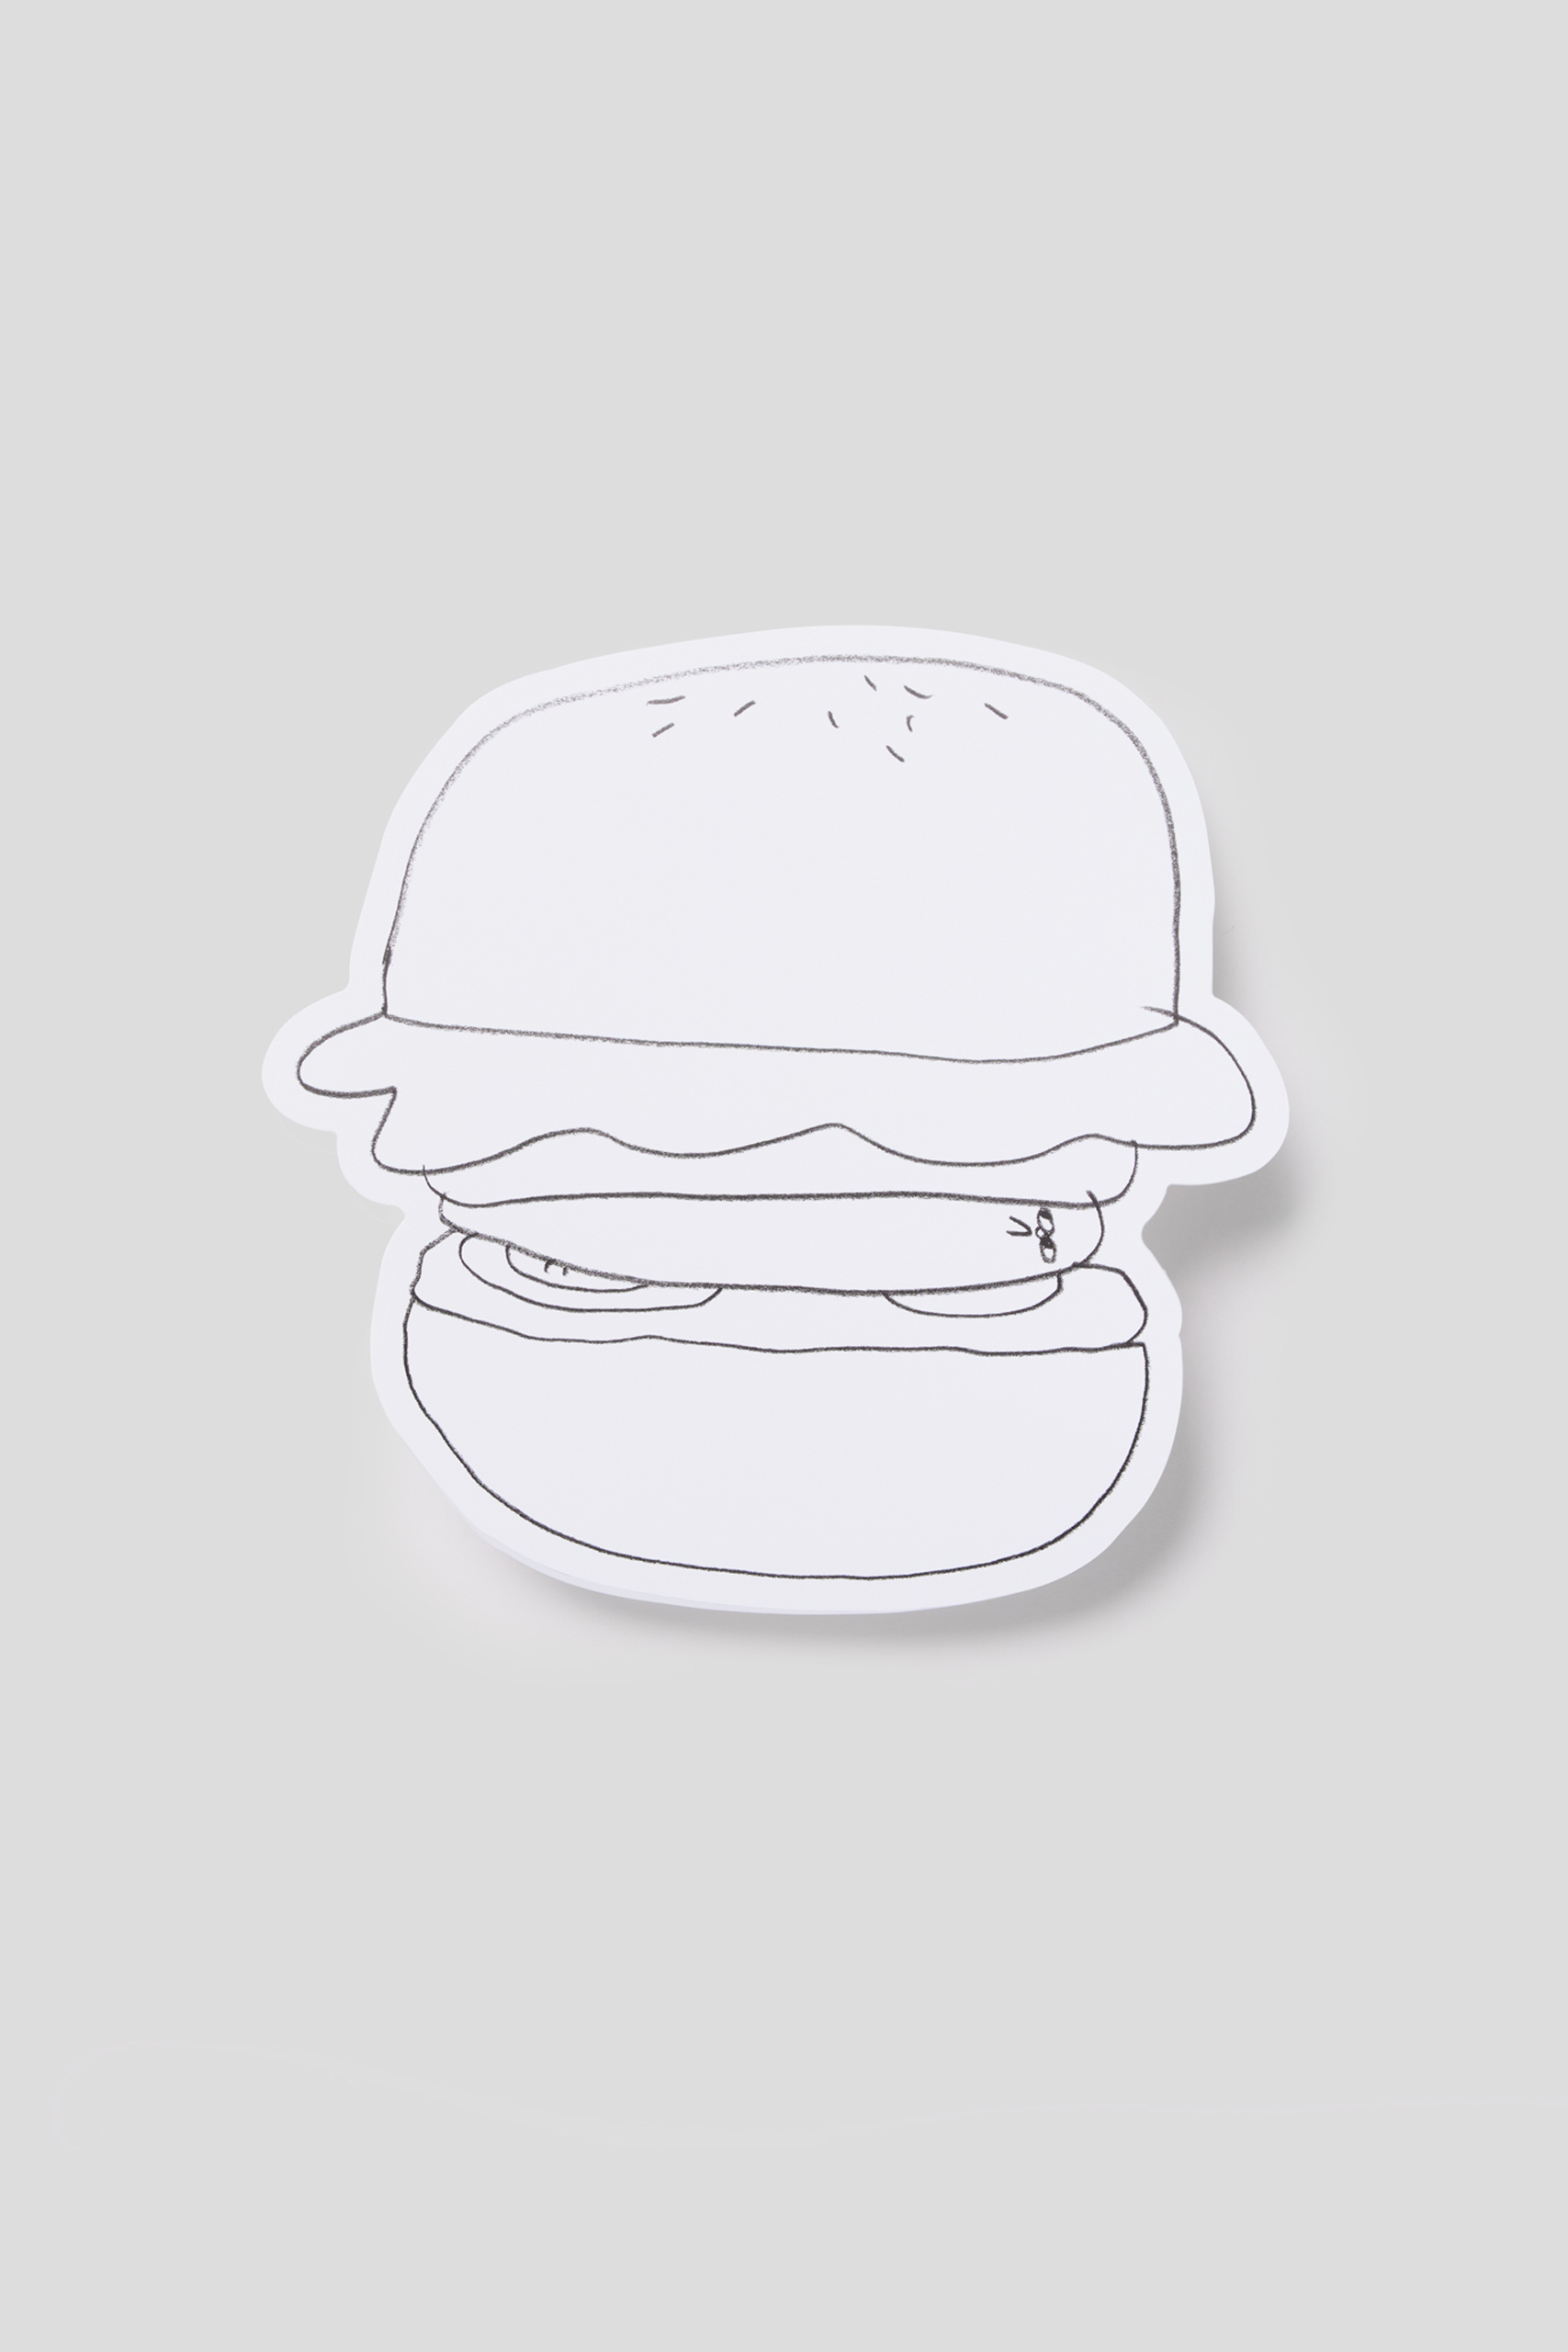 Large size sticker Hamburger